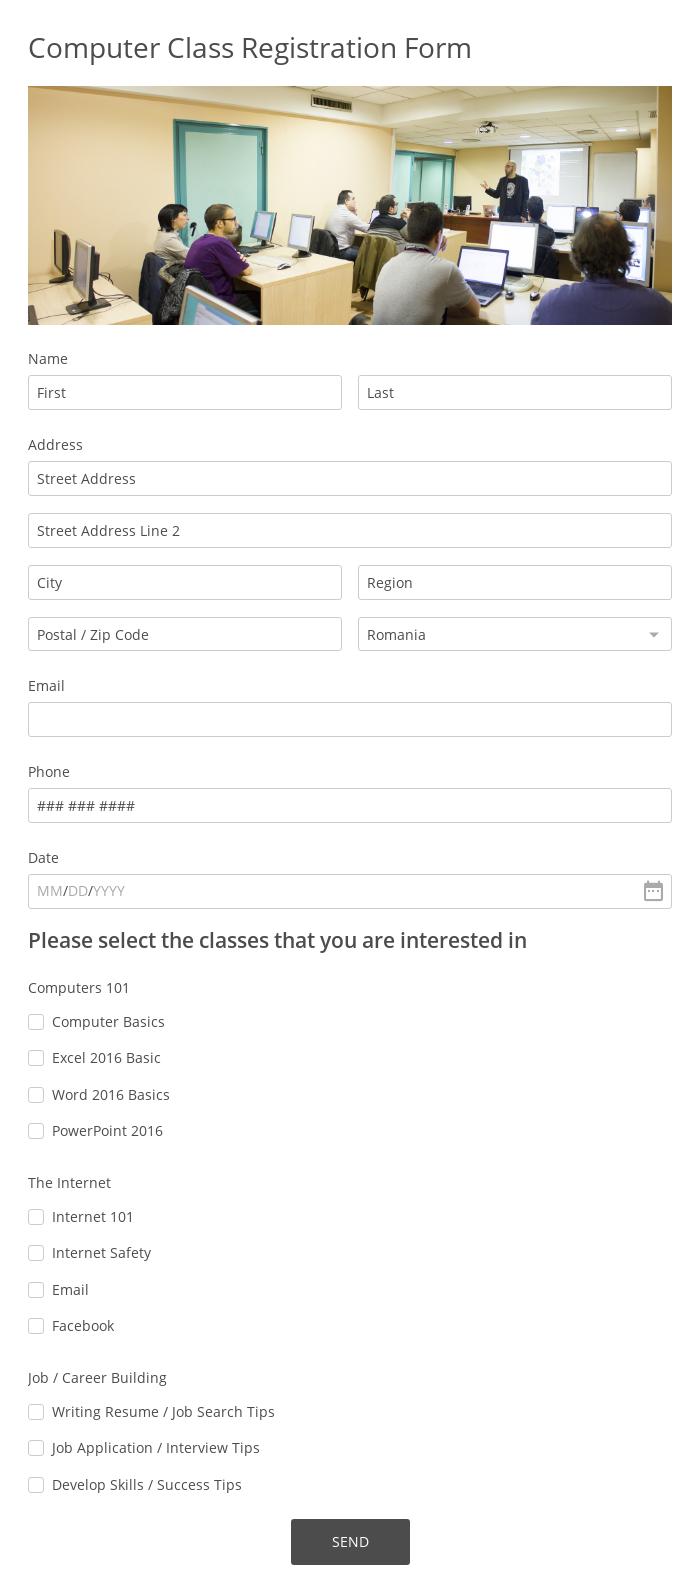 Computer Class Registration Form